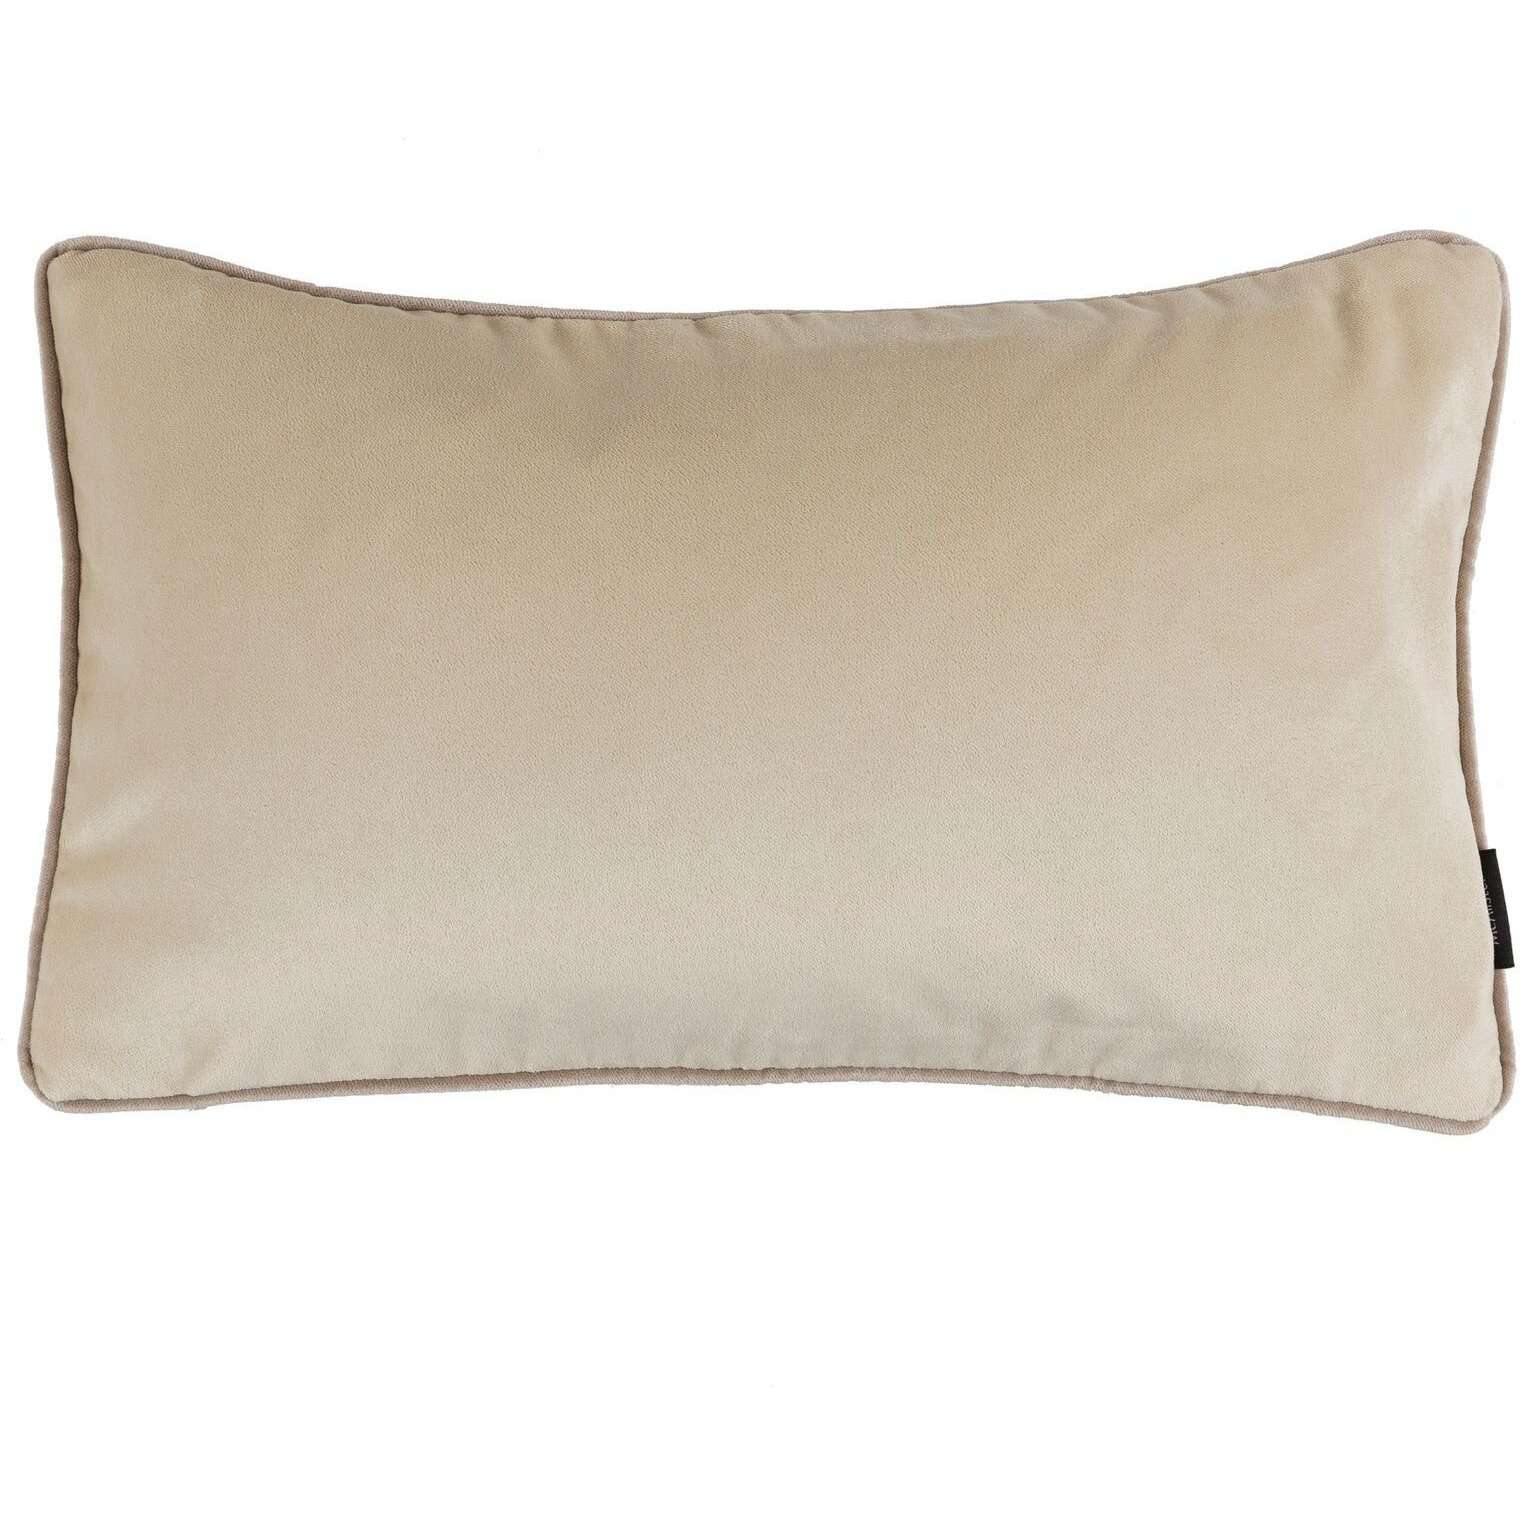 McAlister Textiles Matt Champagne Gold Velvet Pillow Pillow Cover Only 50cm x 30cm 